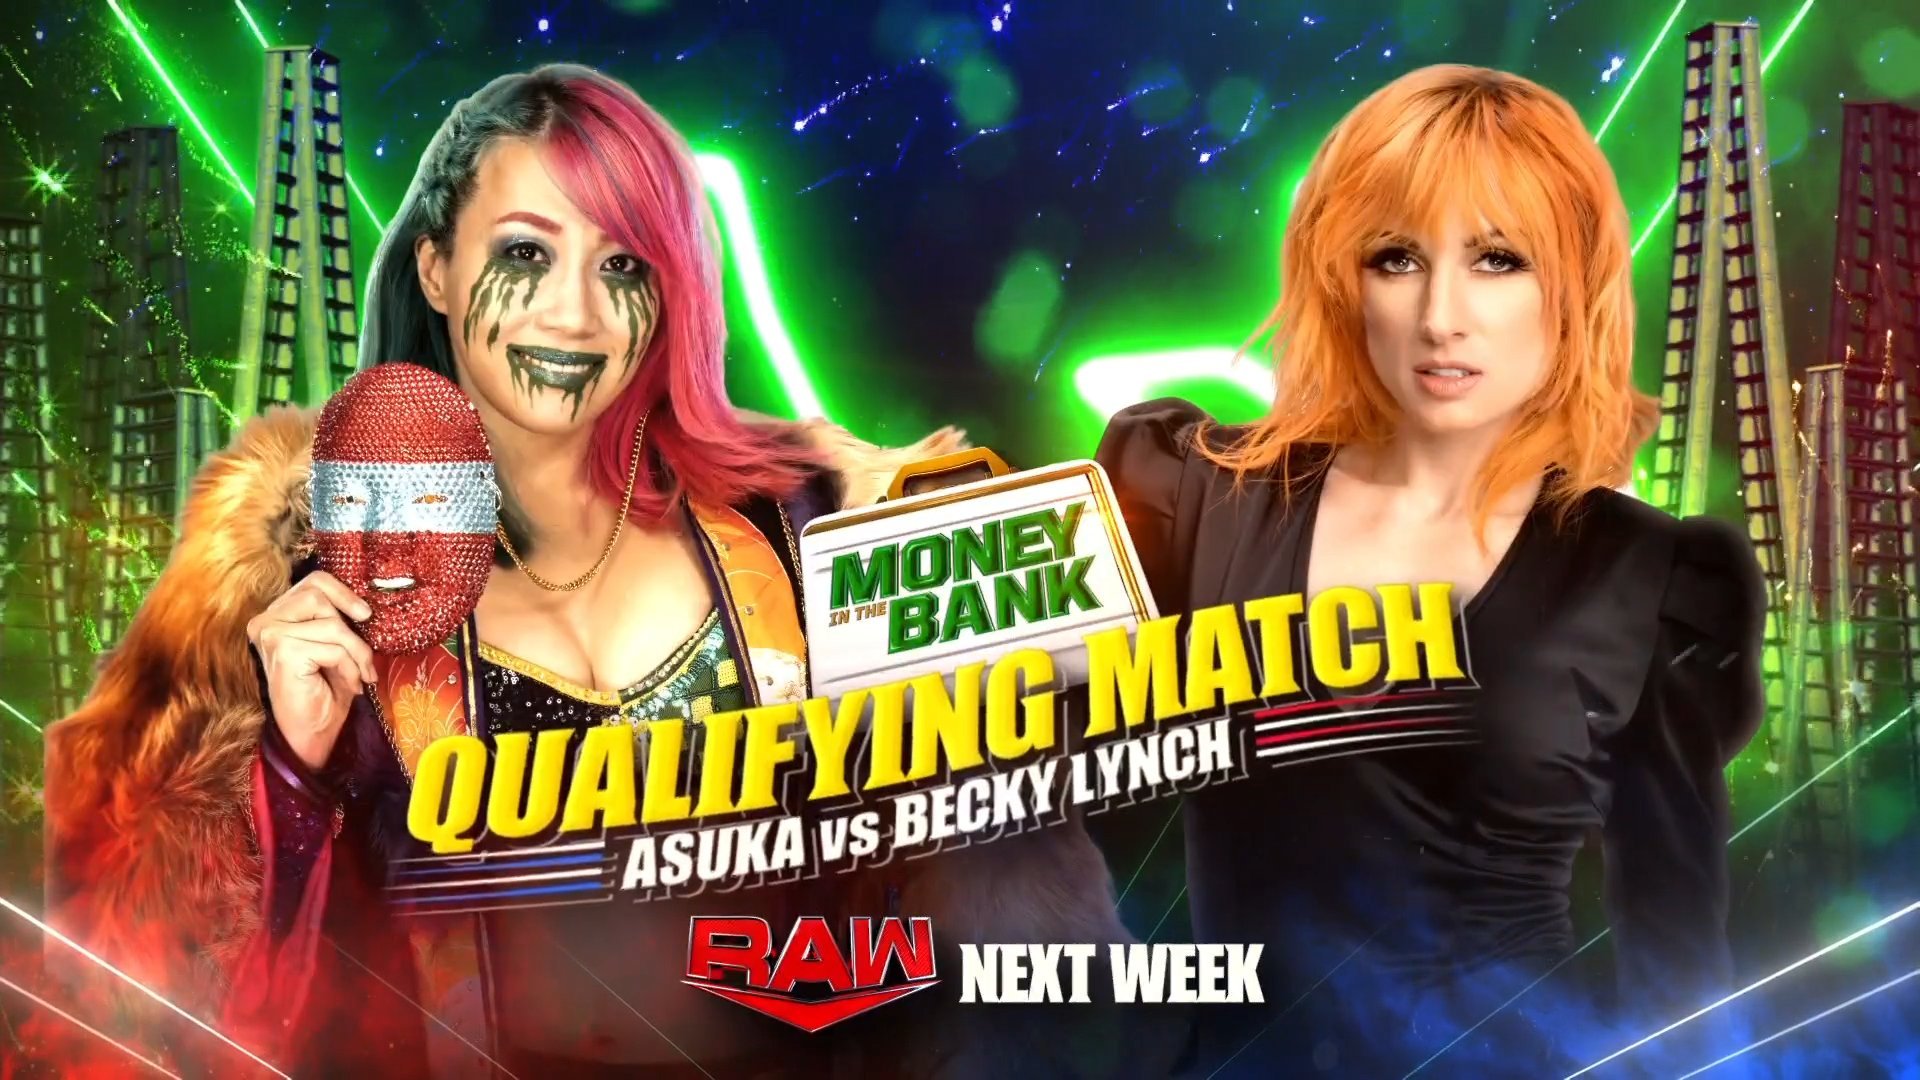 Asuka vs. Lynch MITB Qualifying Match Set For Raw June 20 Diva Dirt